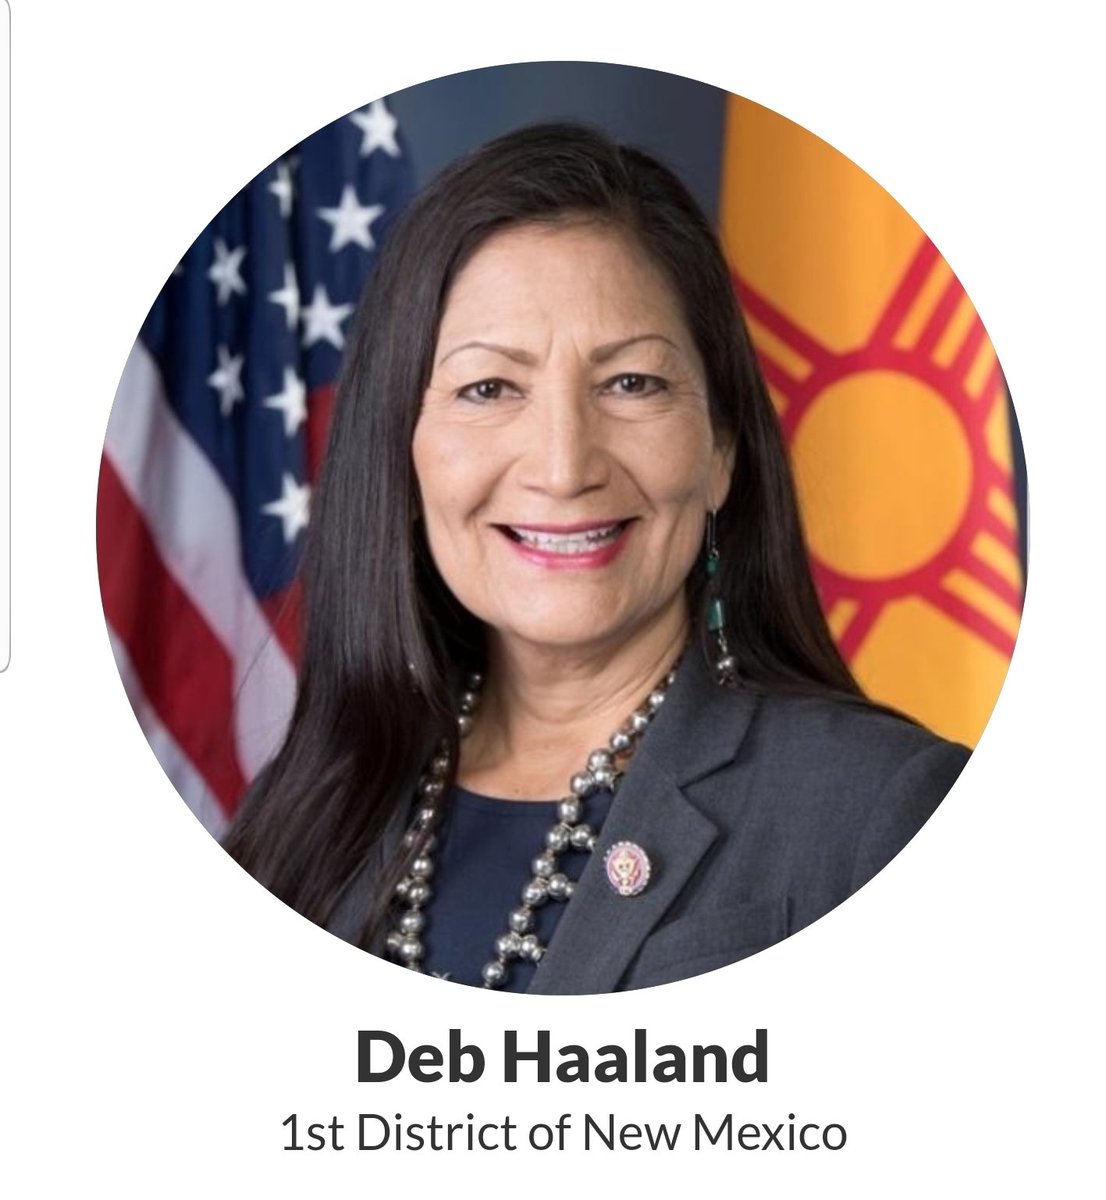 Deb Haaland, New Mexico's 1st District https://haaland.house.gov/ 62/98